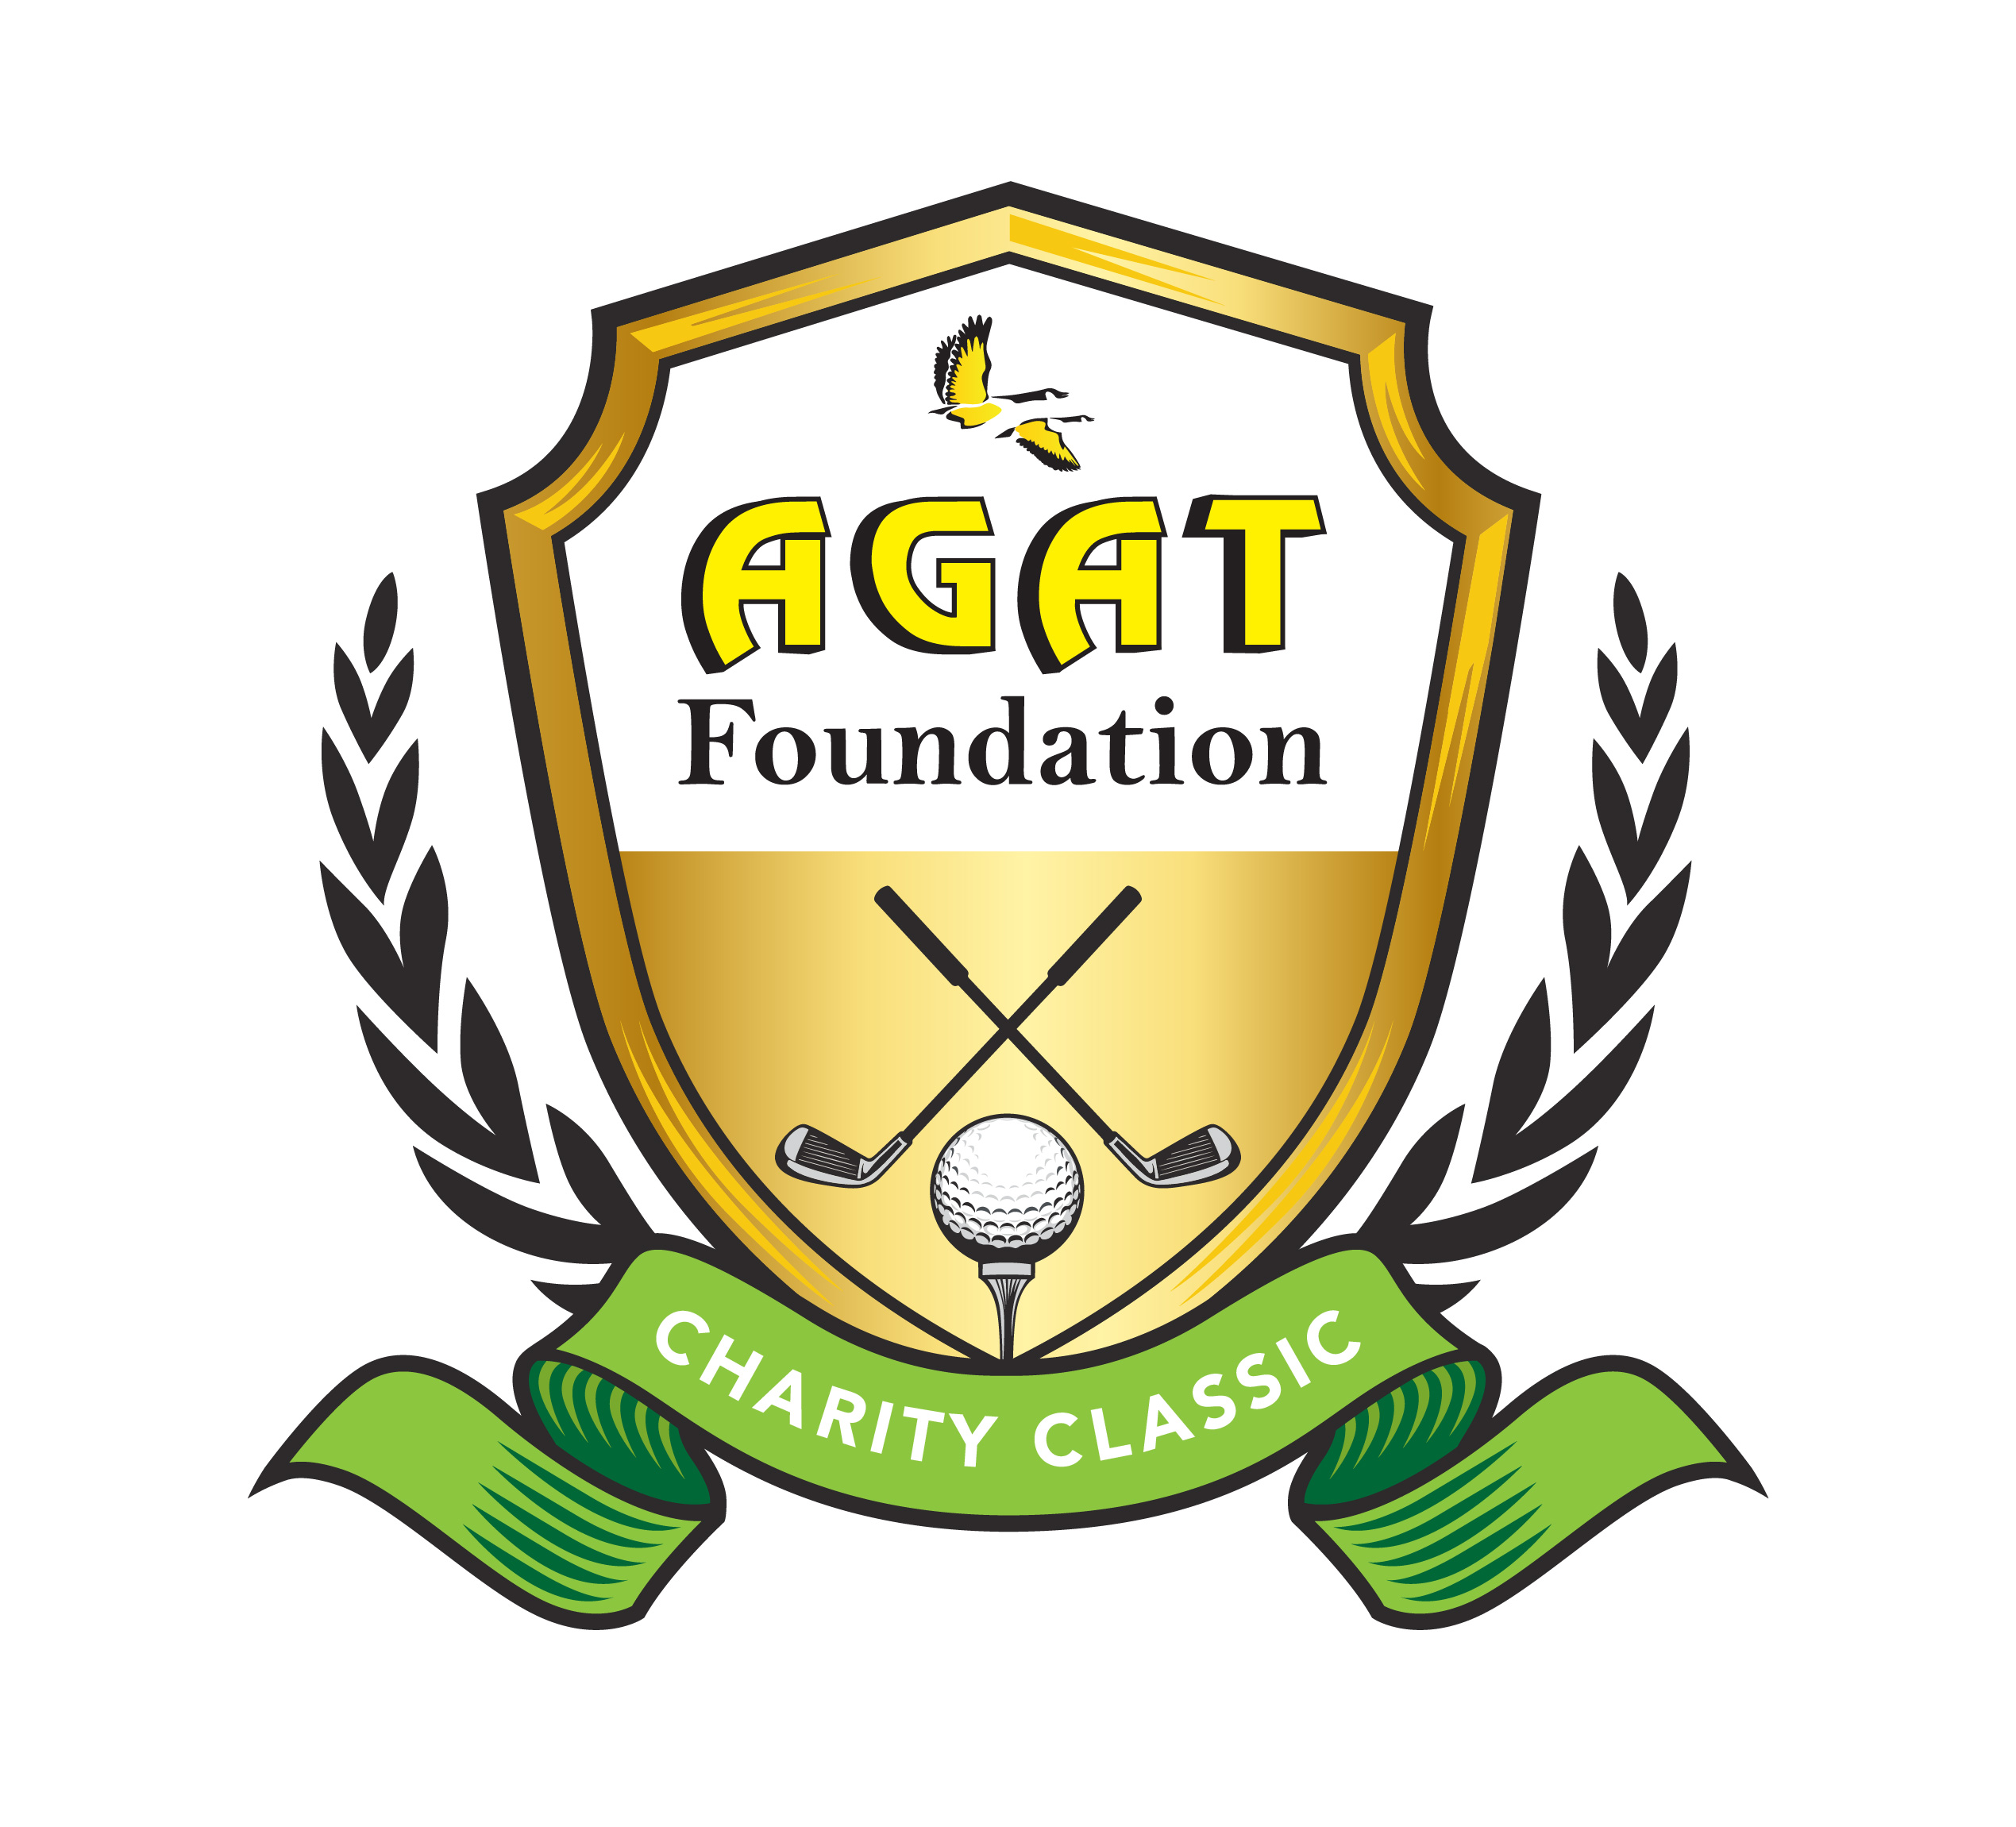 Fondation AGAT logo